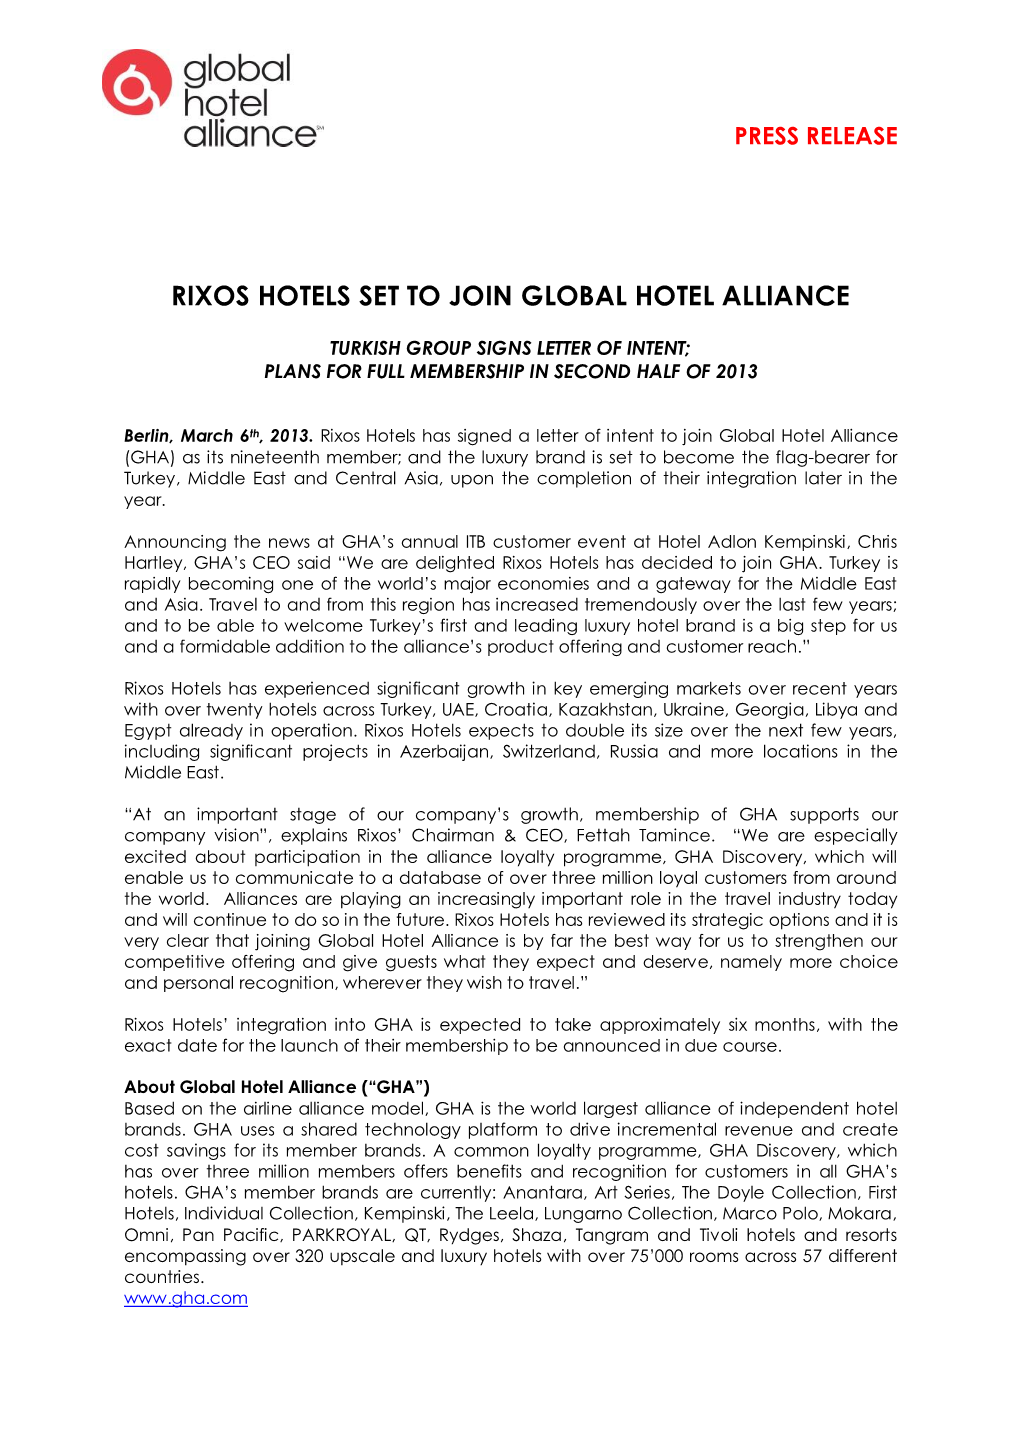 Rixos Hotels Set to Join Global Hotel Alliance